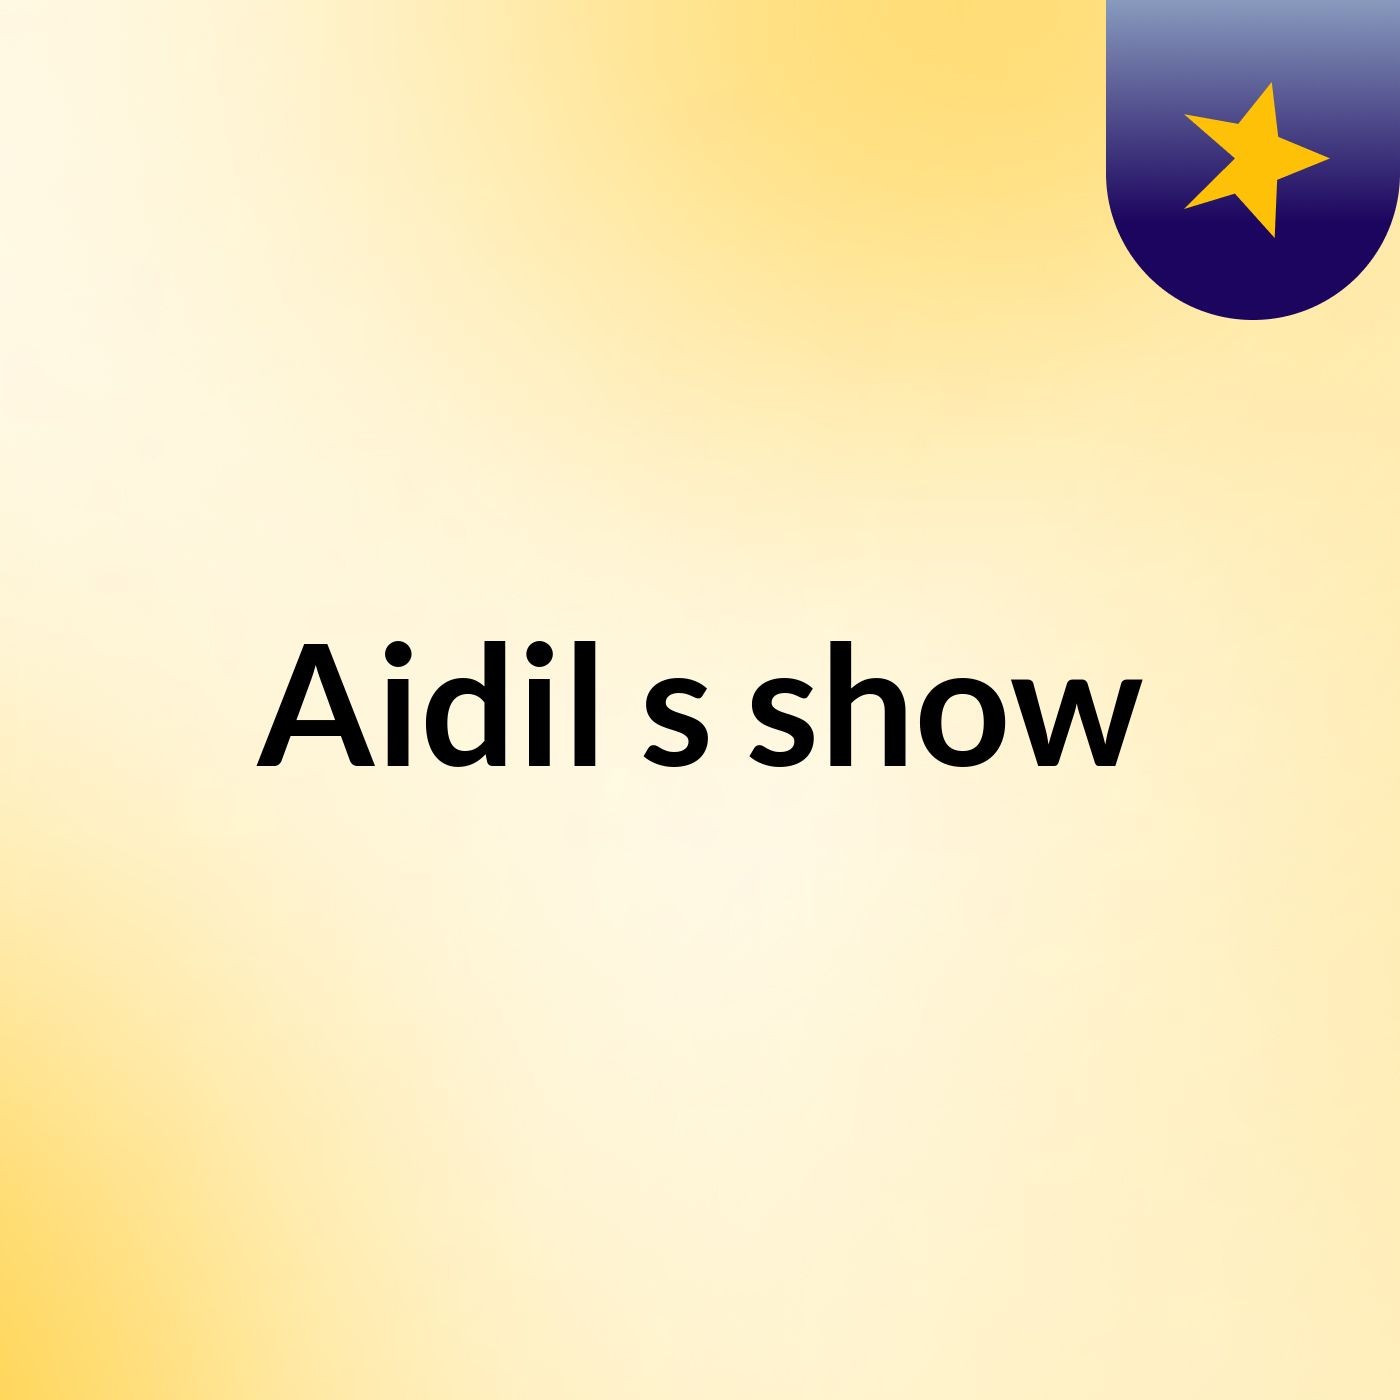 Episode 2 - Aidil's show